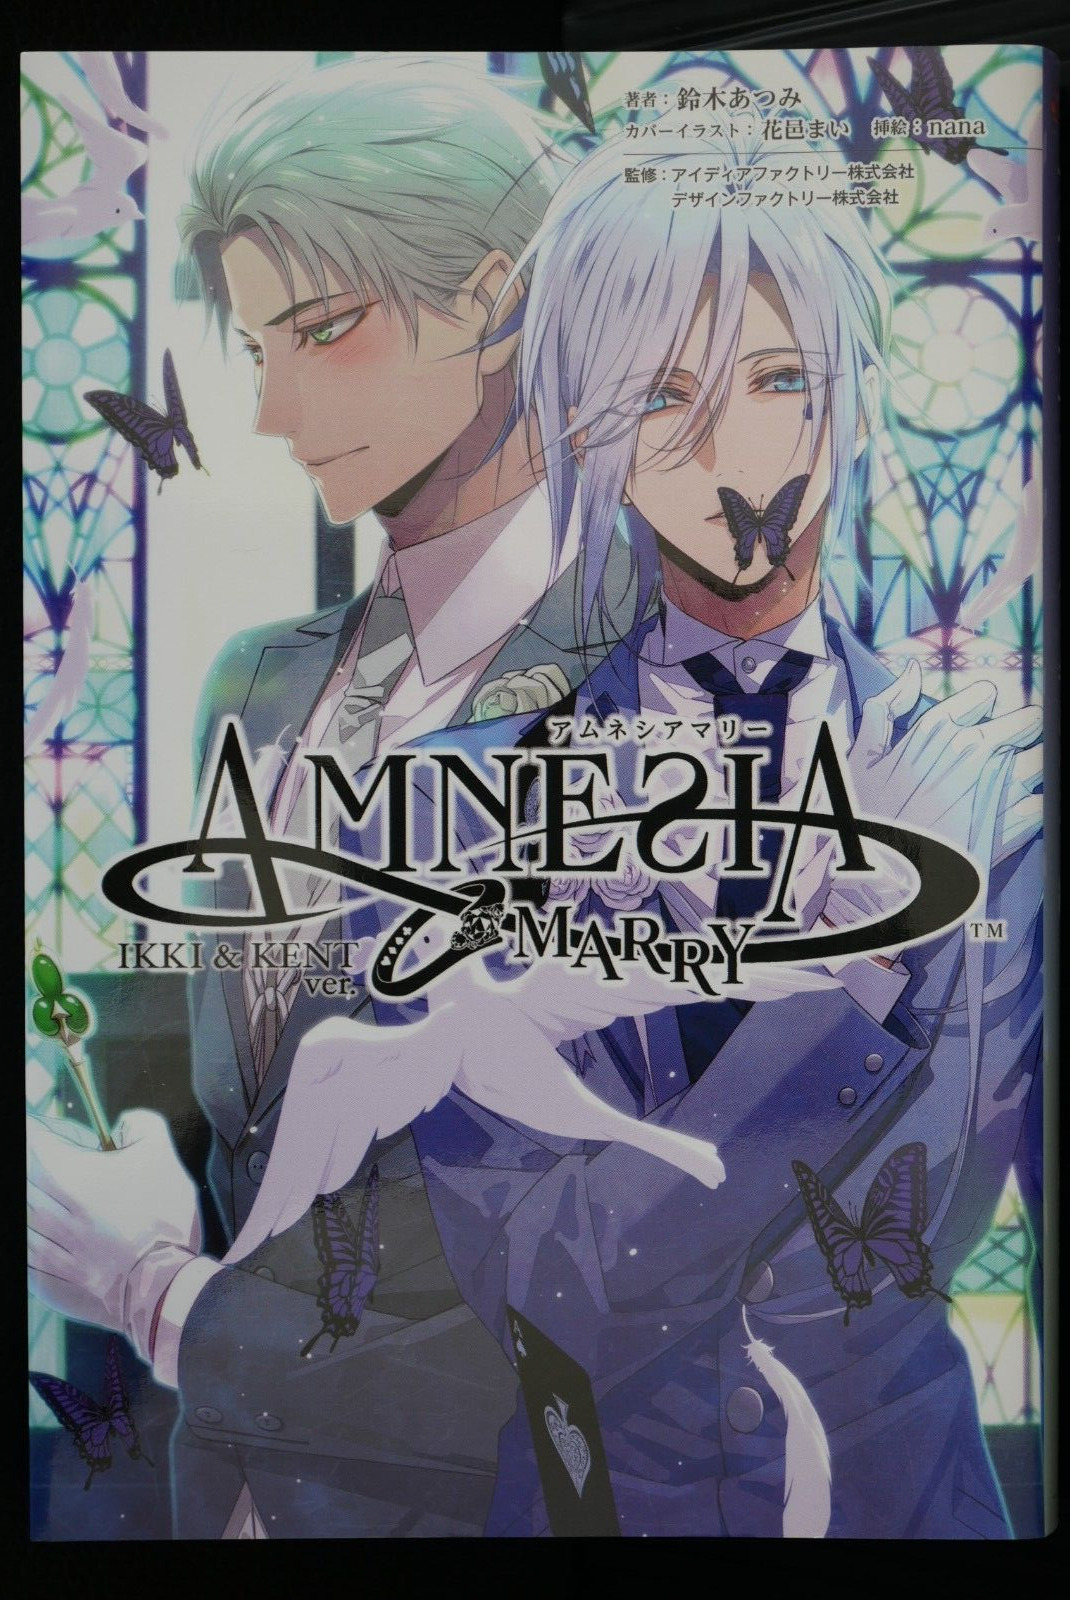 Amnesia: Novel \'Marry Ikki & Kent ver.\' - JAPAN